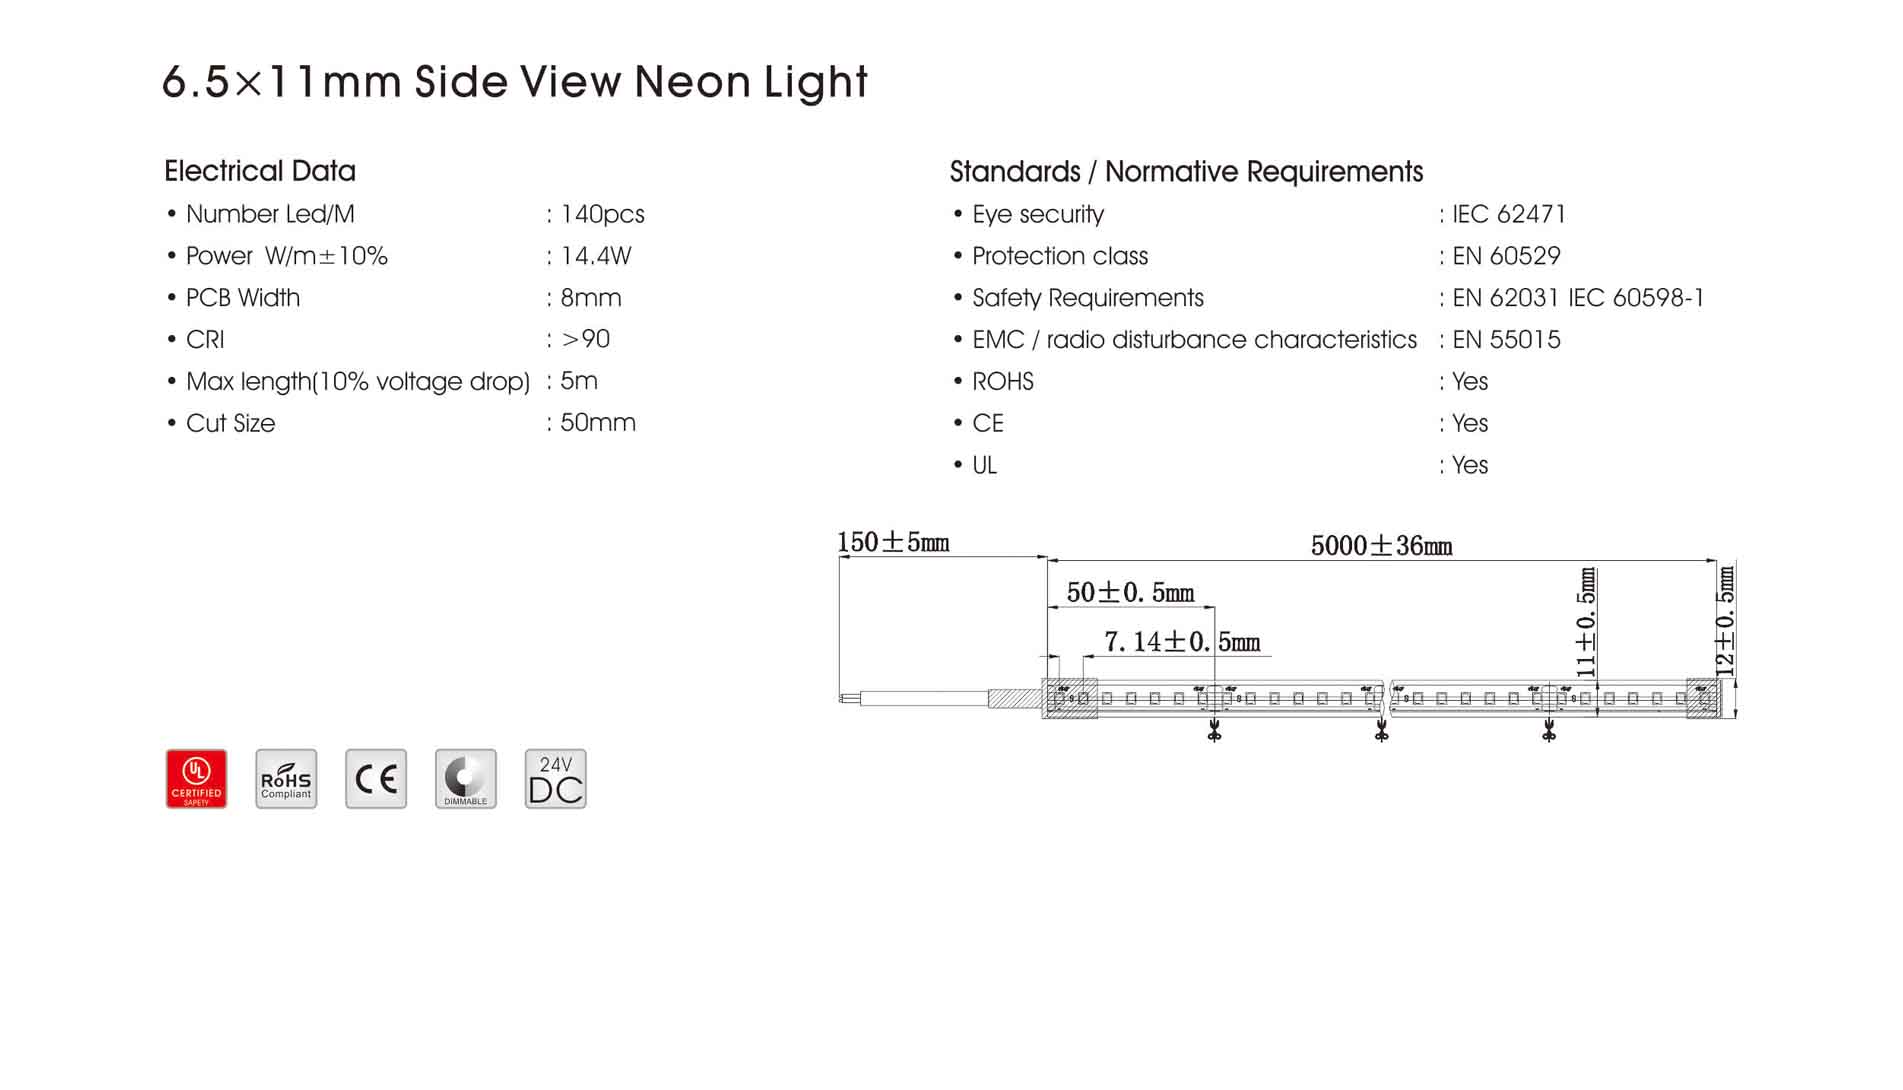 6.5x11mm side view neon light